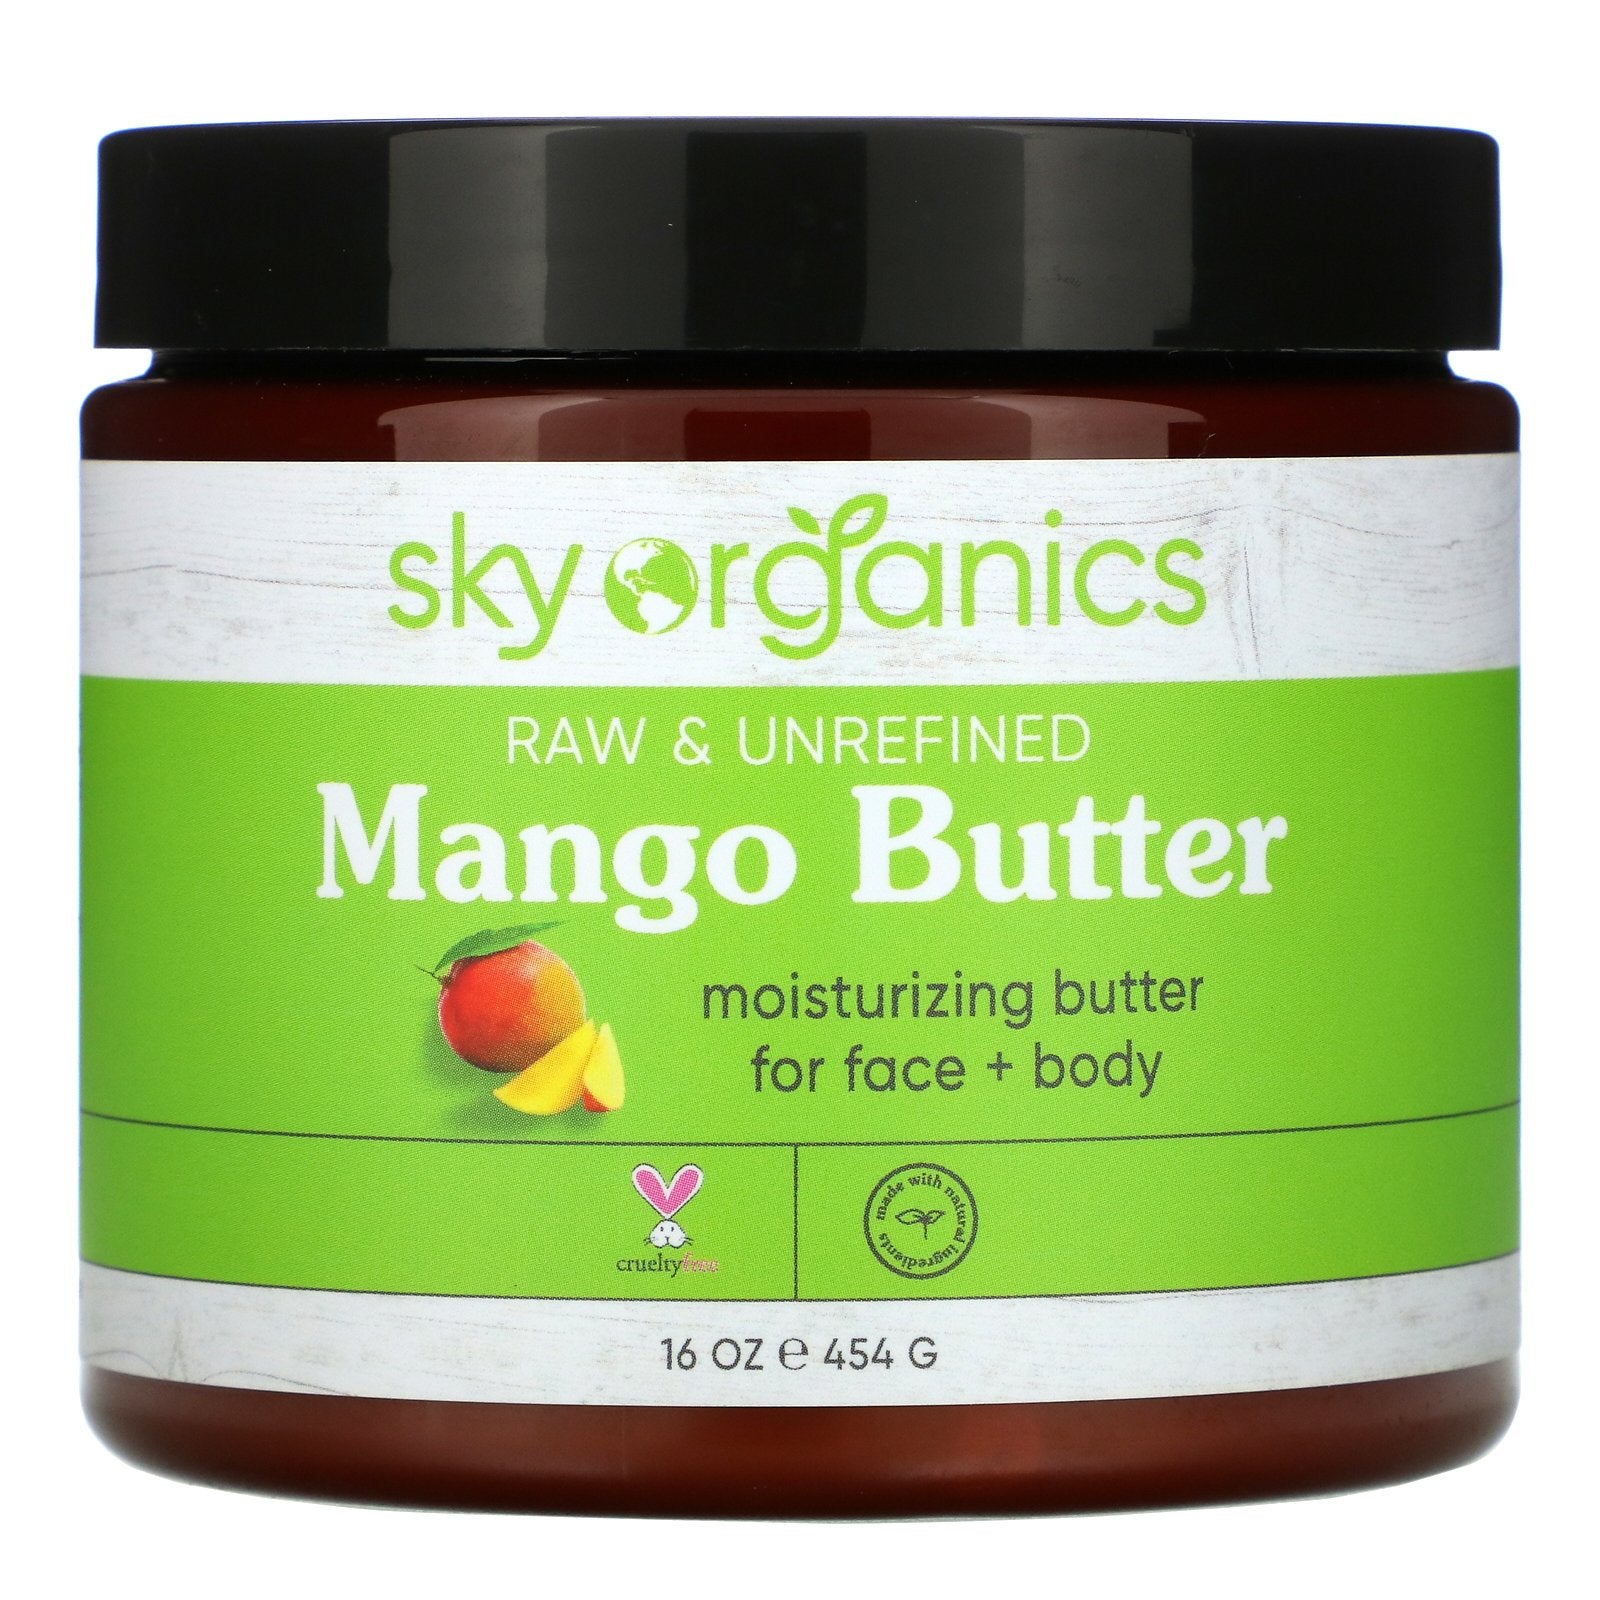 Sky Organics, Mango Butter, Raw & Unrefined, 16 oz (454 g)